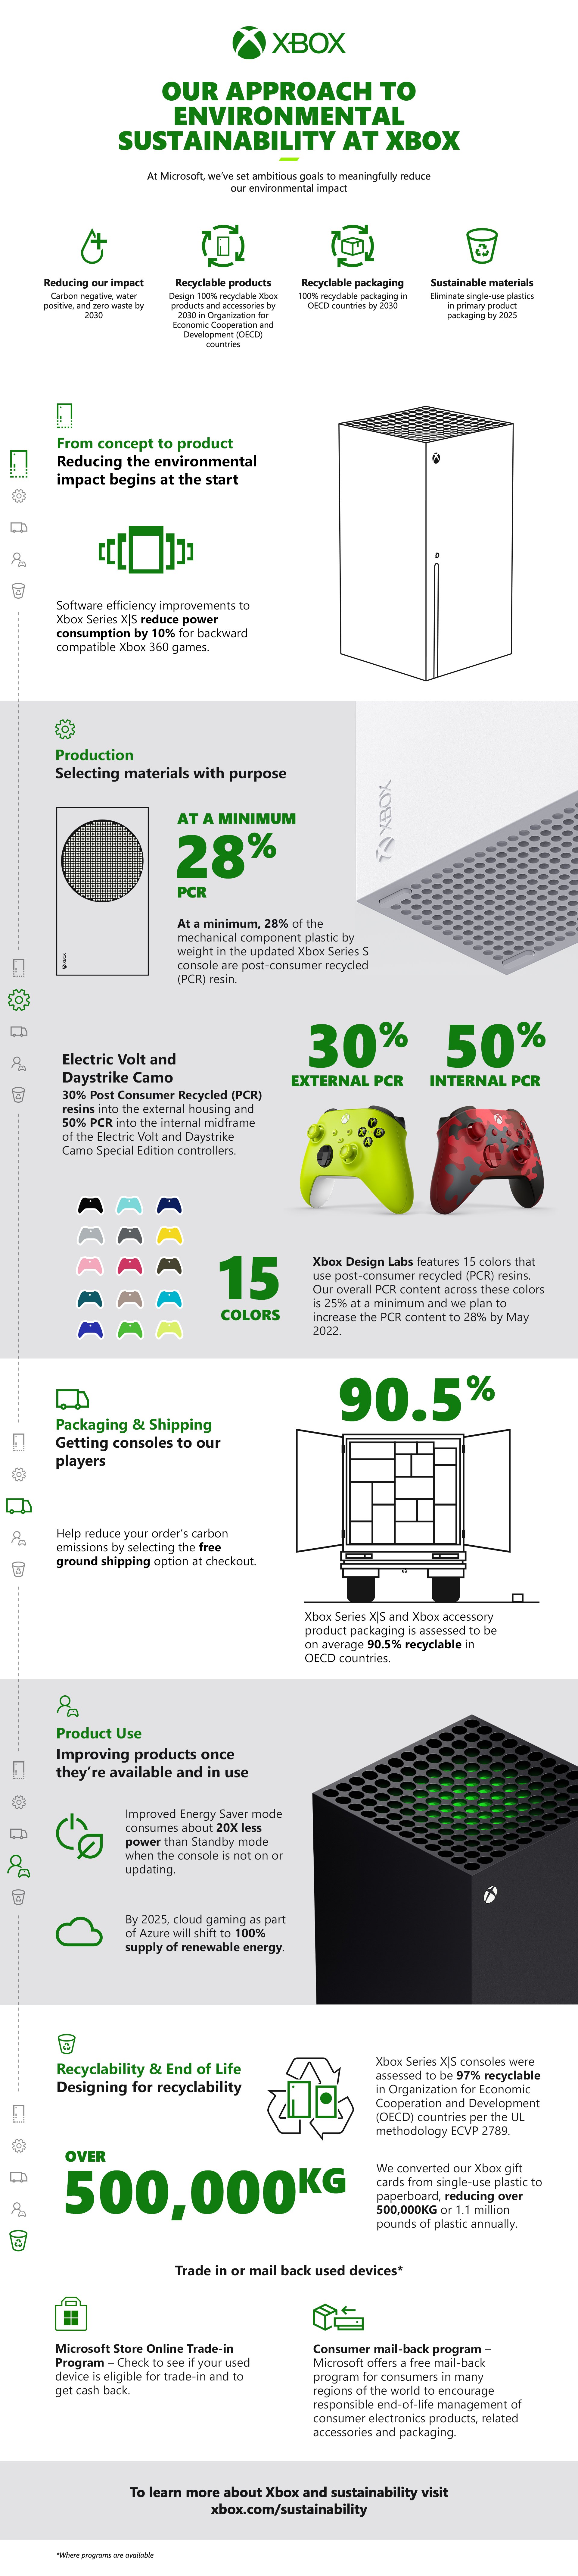 Environmental Sustainability at Xbox